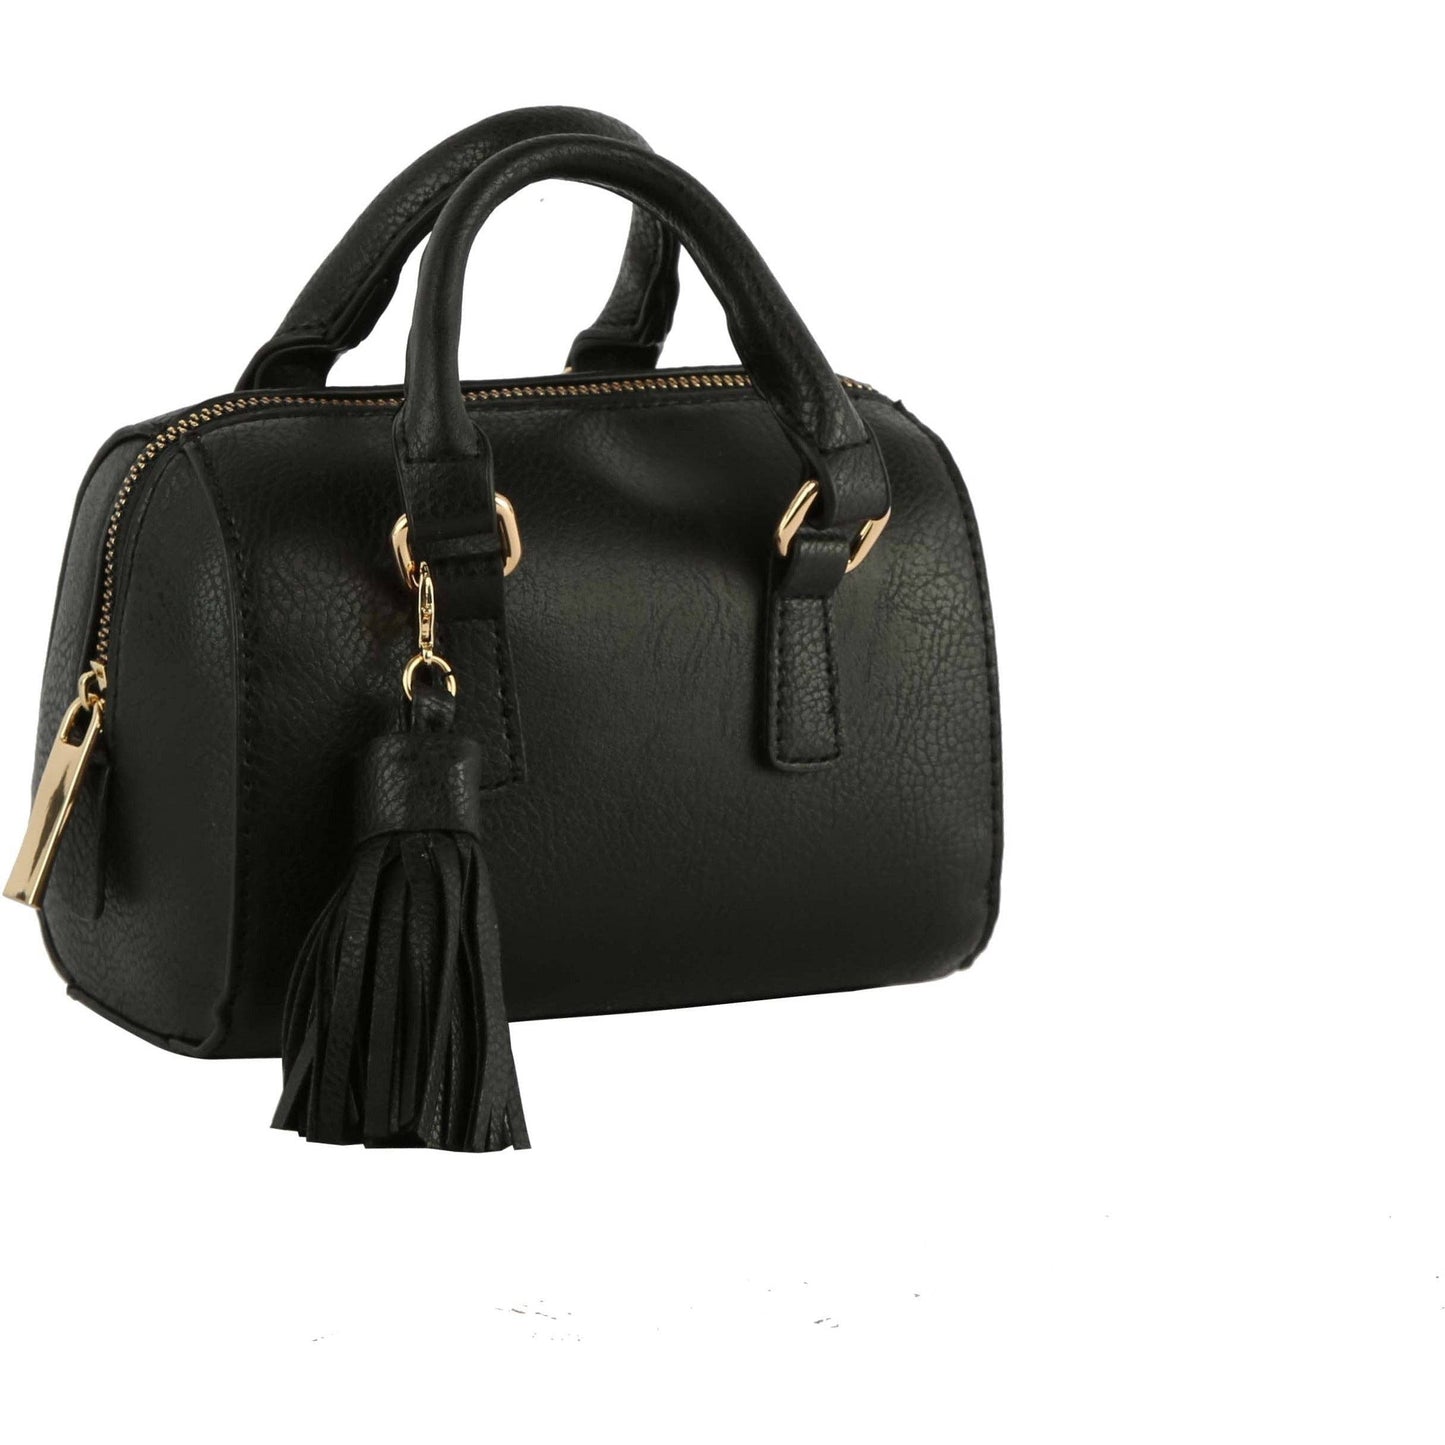 Cylinder Top Handle Satchel Handbag for Women Soft Leather S